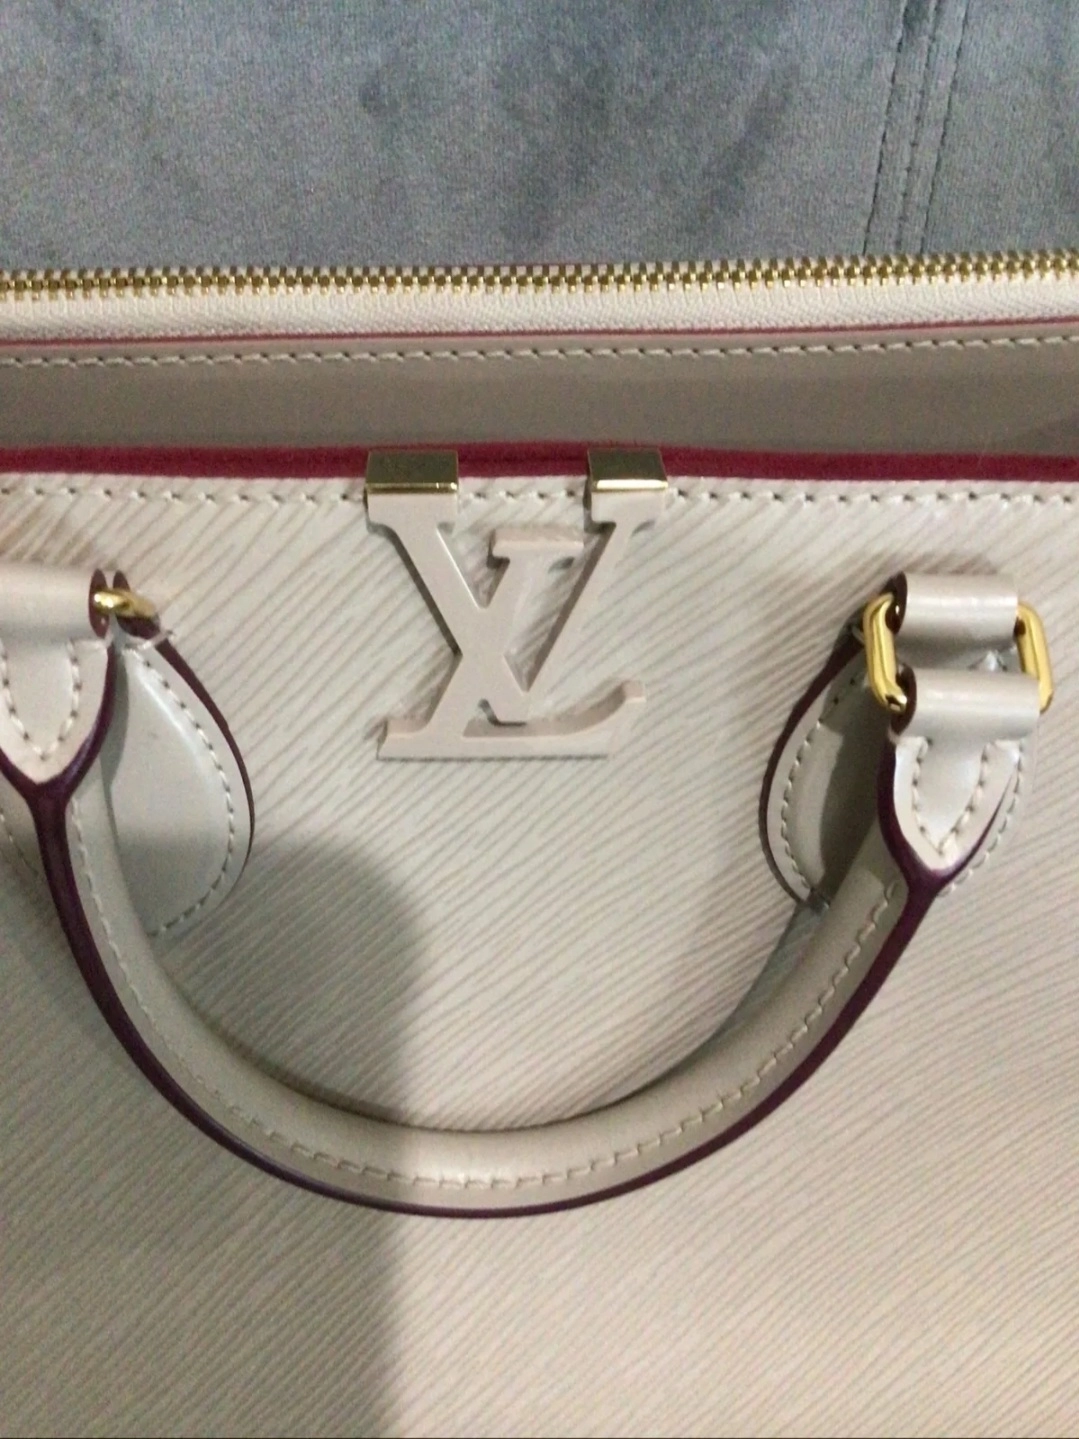 Galliera - Damier - Bolso de mano Louis Vuitton Pleaty en lona denim  Monogram y cuero natural - Bag - Azur - Shoulder - Louis - N55215 – dct -  ep_vintage luxury Store - Vuitton - PM